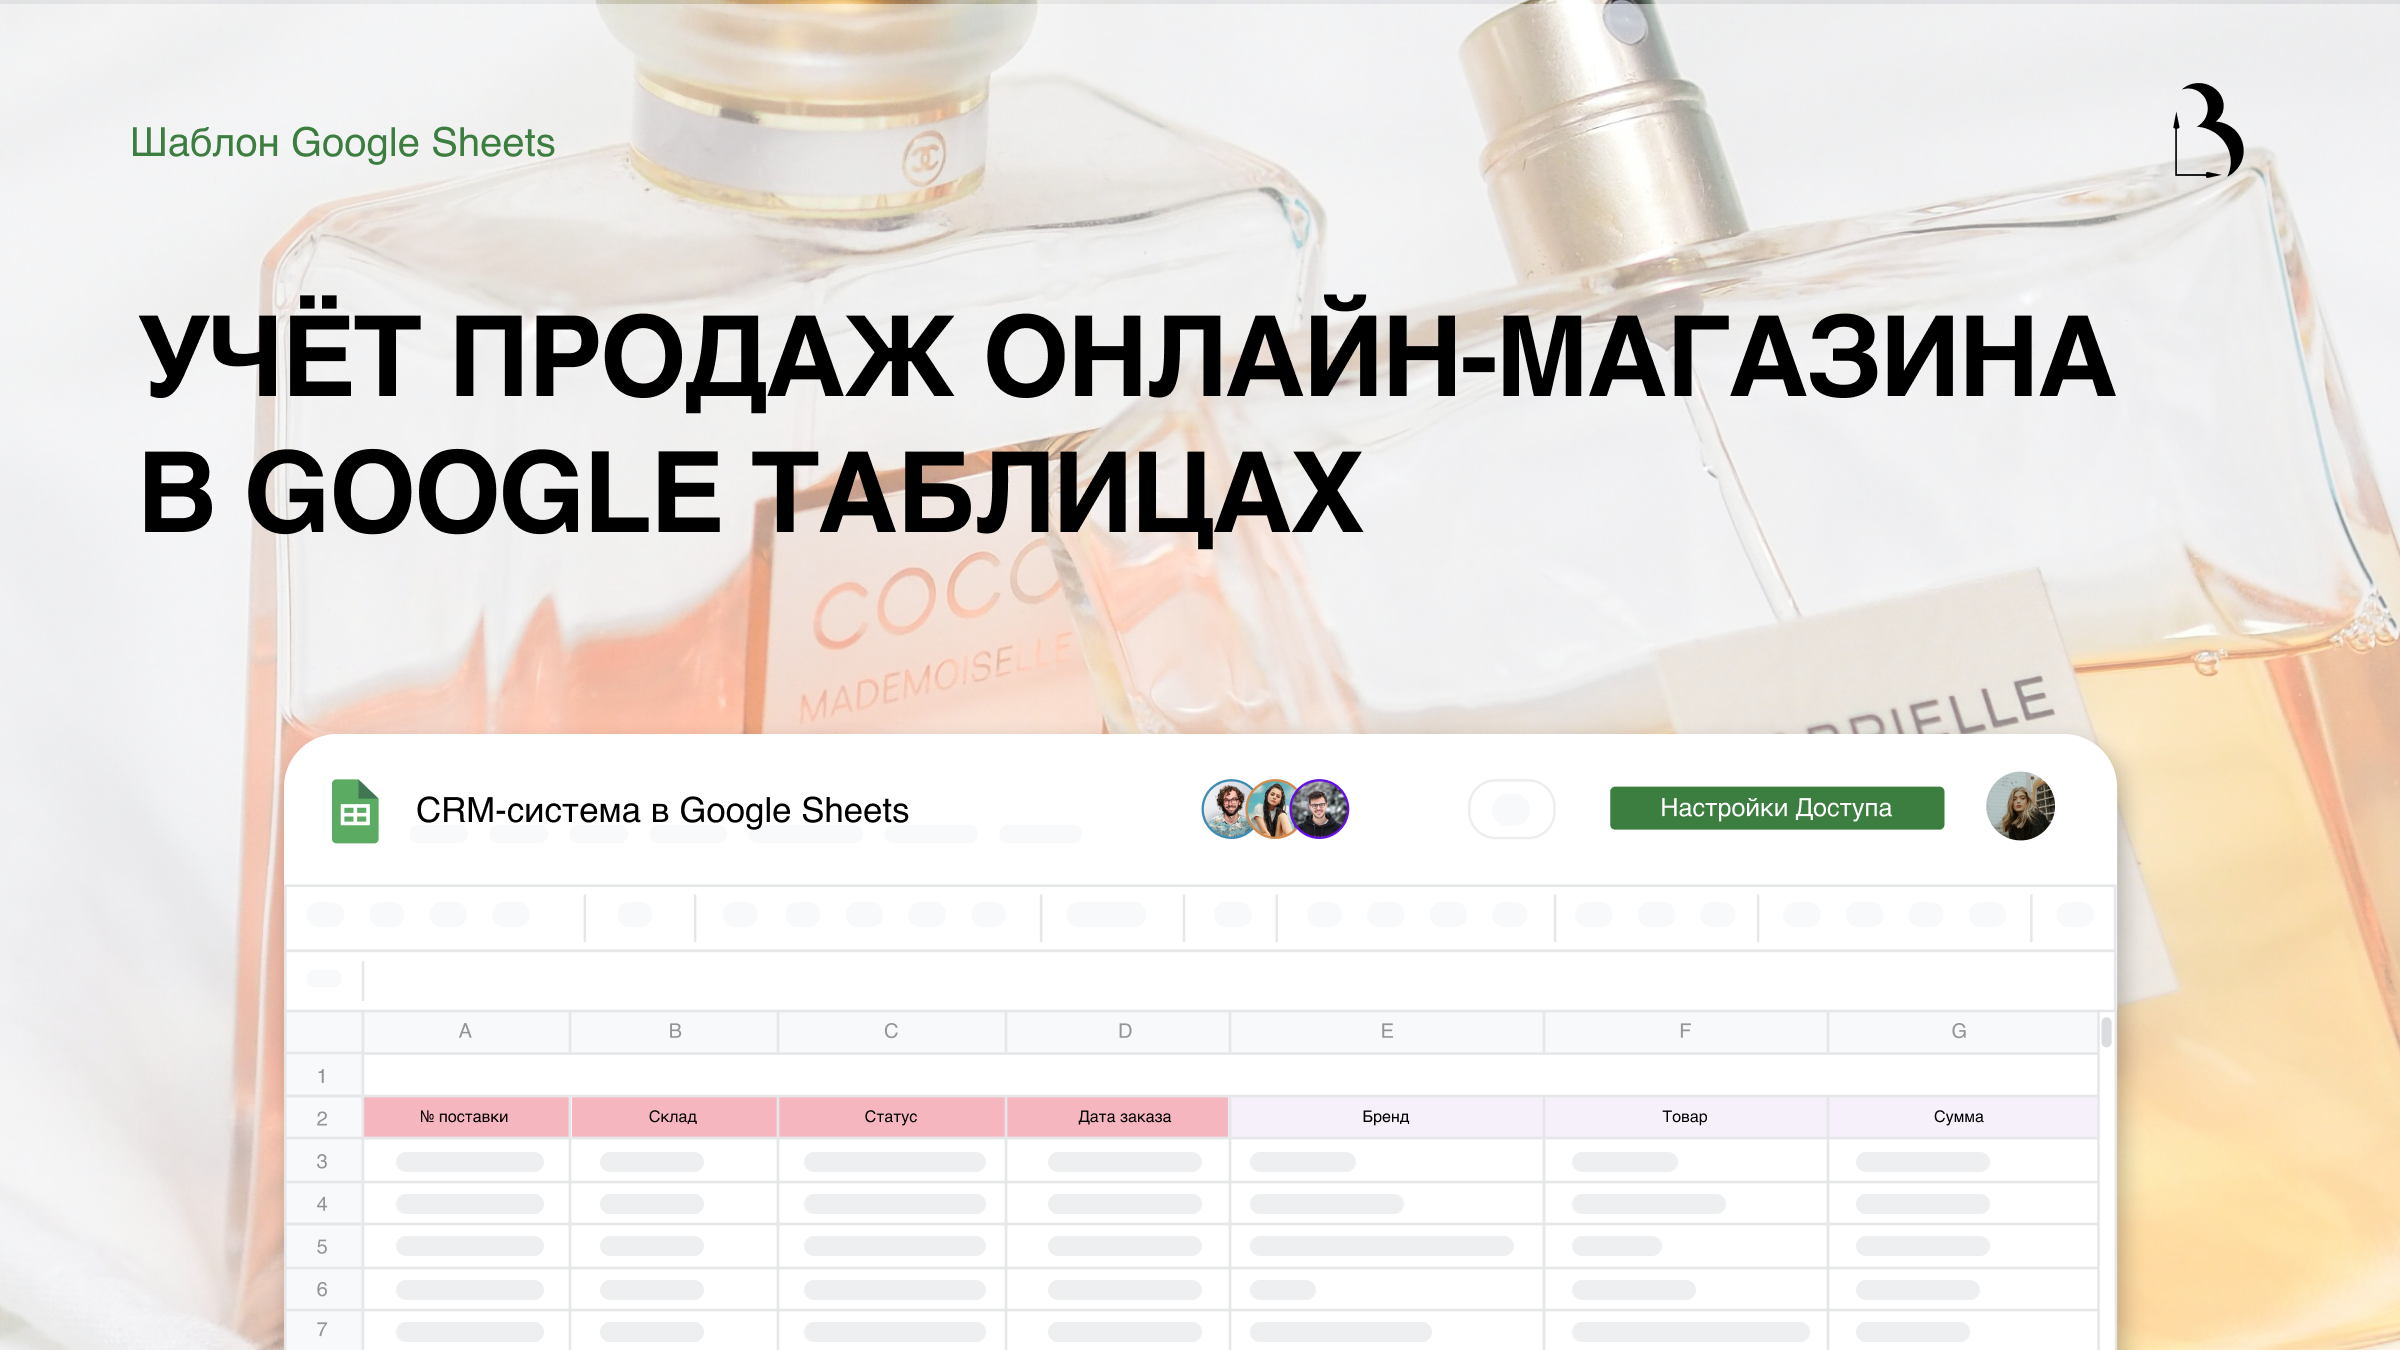 Шаблон Google Sheets. Полноценный учёт продаж в гугл таблицах для онлайн-магазина #googlesheets